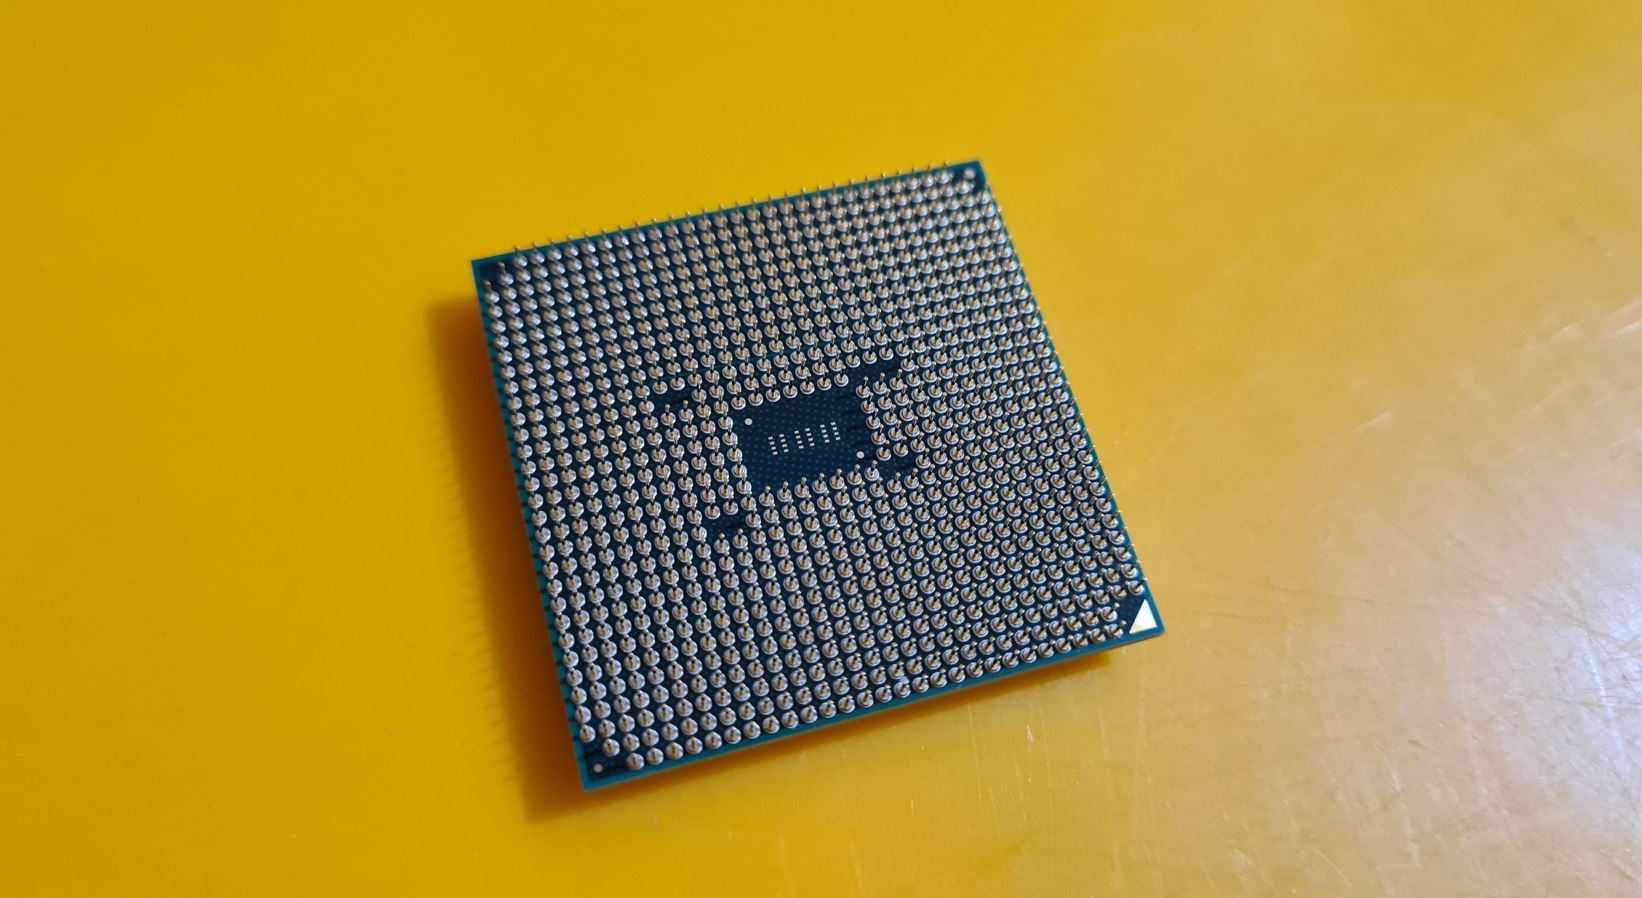 Procesor Quad AMD A10-6700T,2,50Ghz Turbo 3,50Ghz,Socket FM2,FM2+